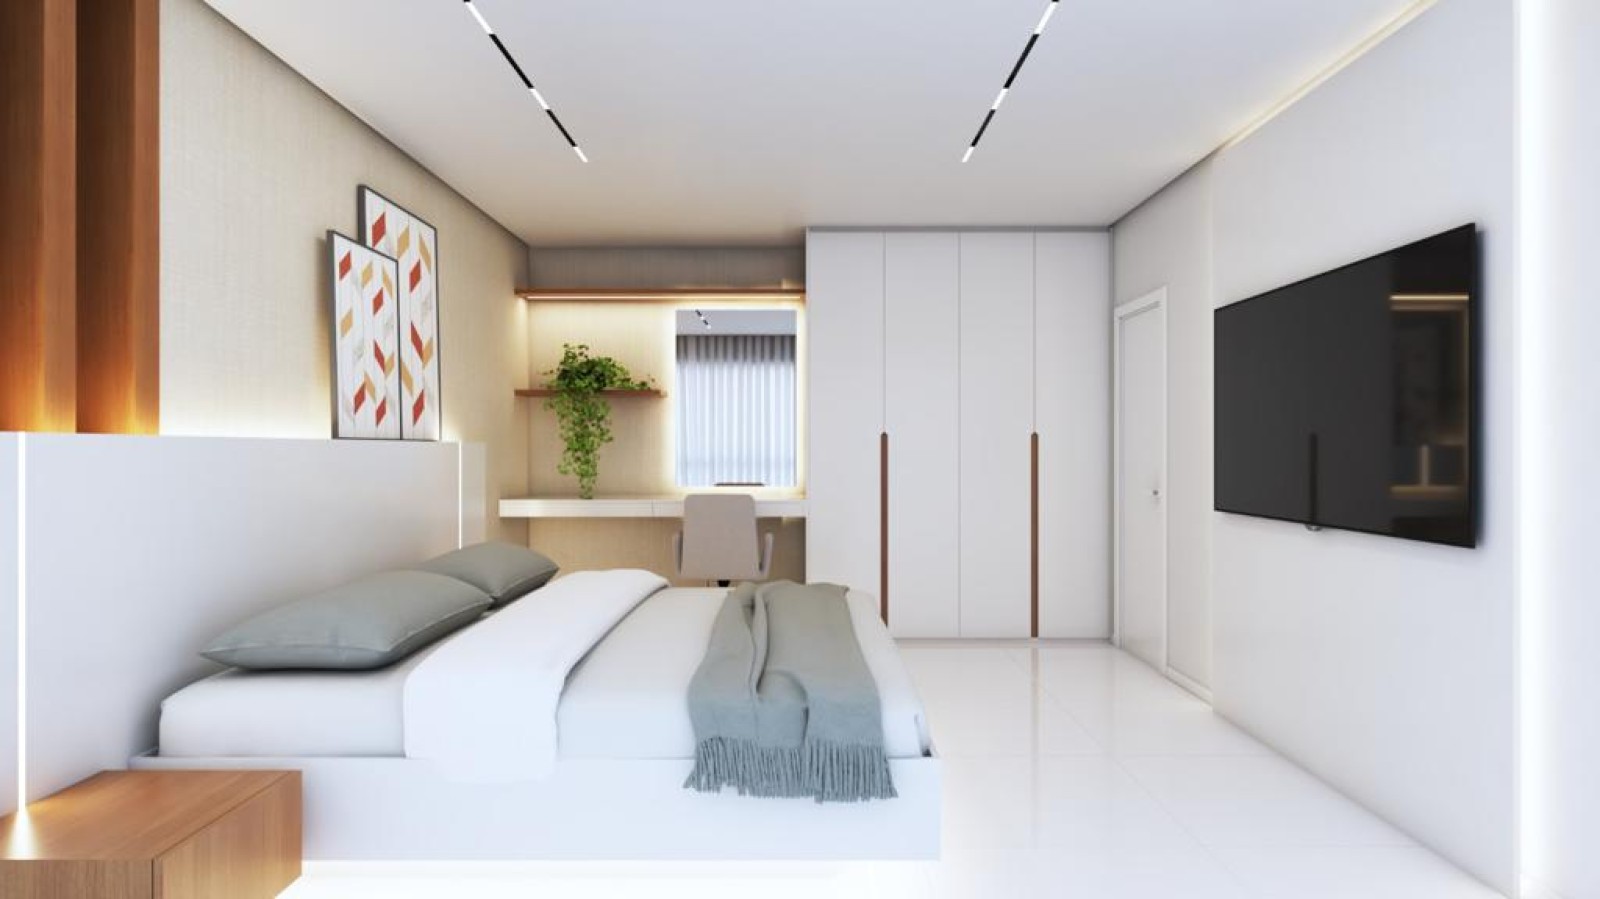 2 Bedroom Luxury House, for sale, in Portimão, Algarve_224296